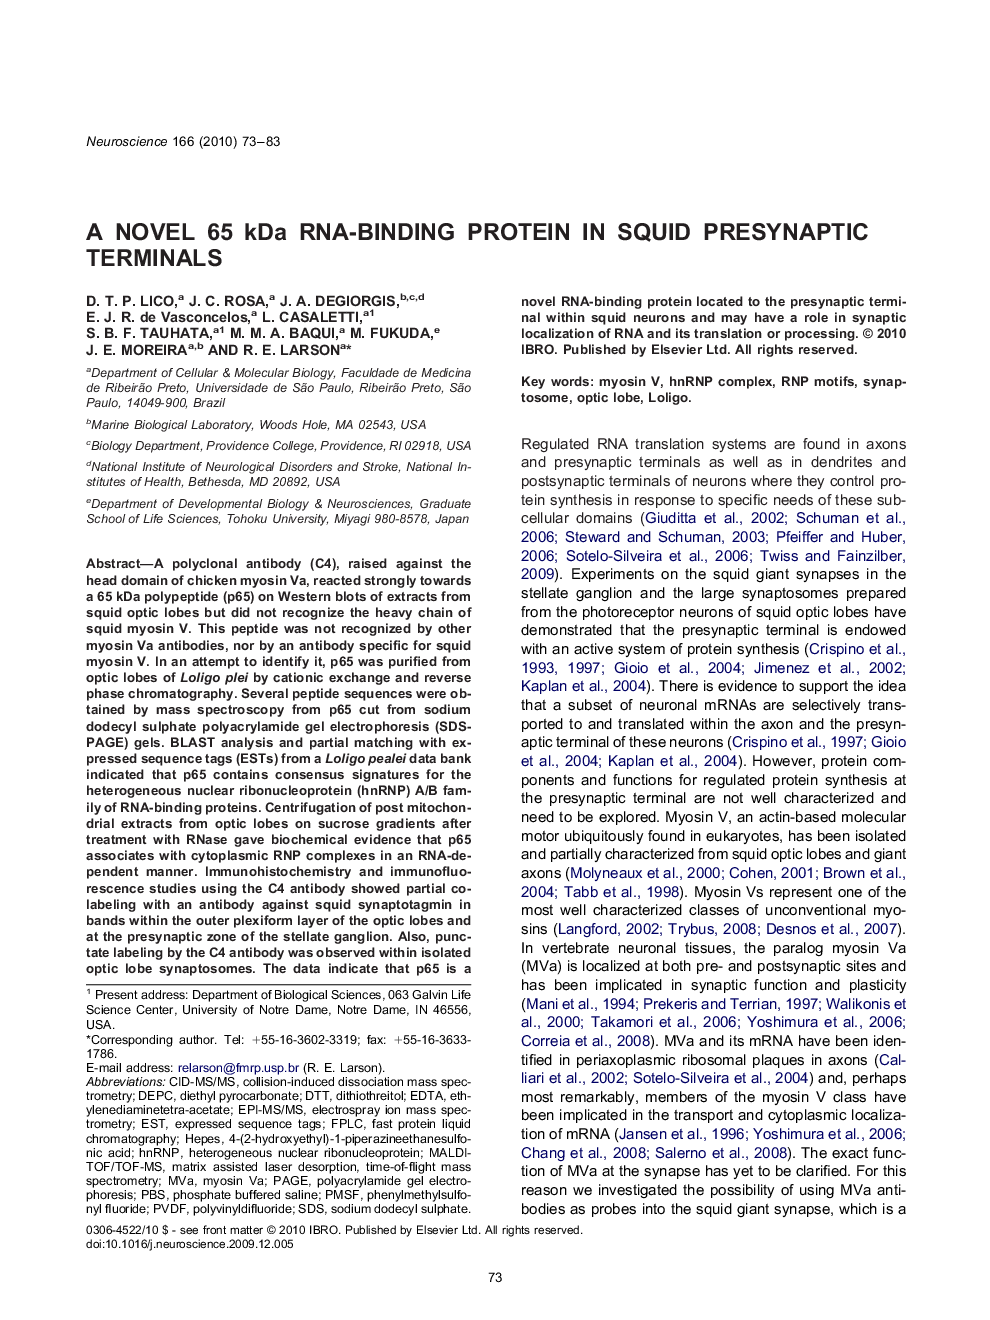 A novel 65 kDa RNA-binding protein in squid presynaptic terminals